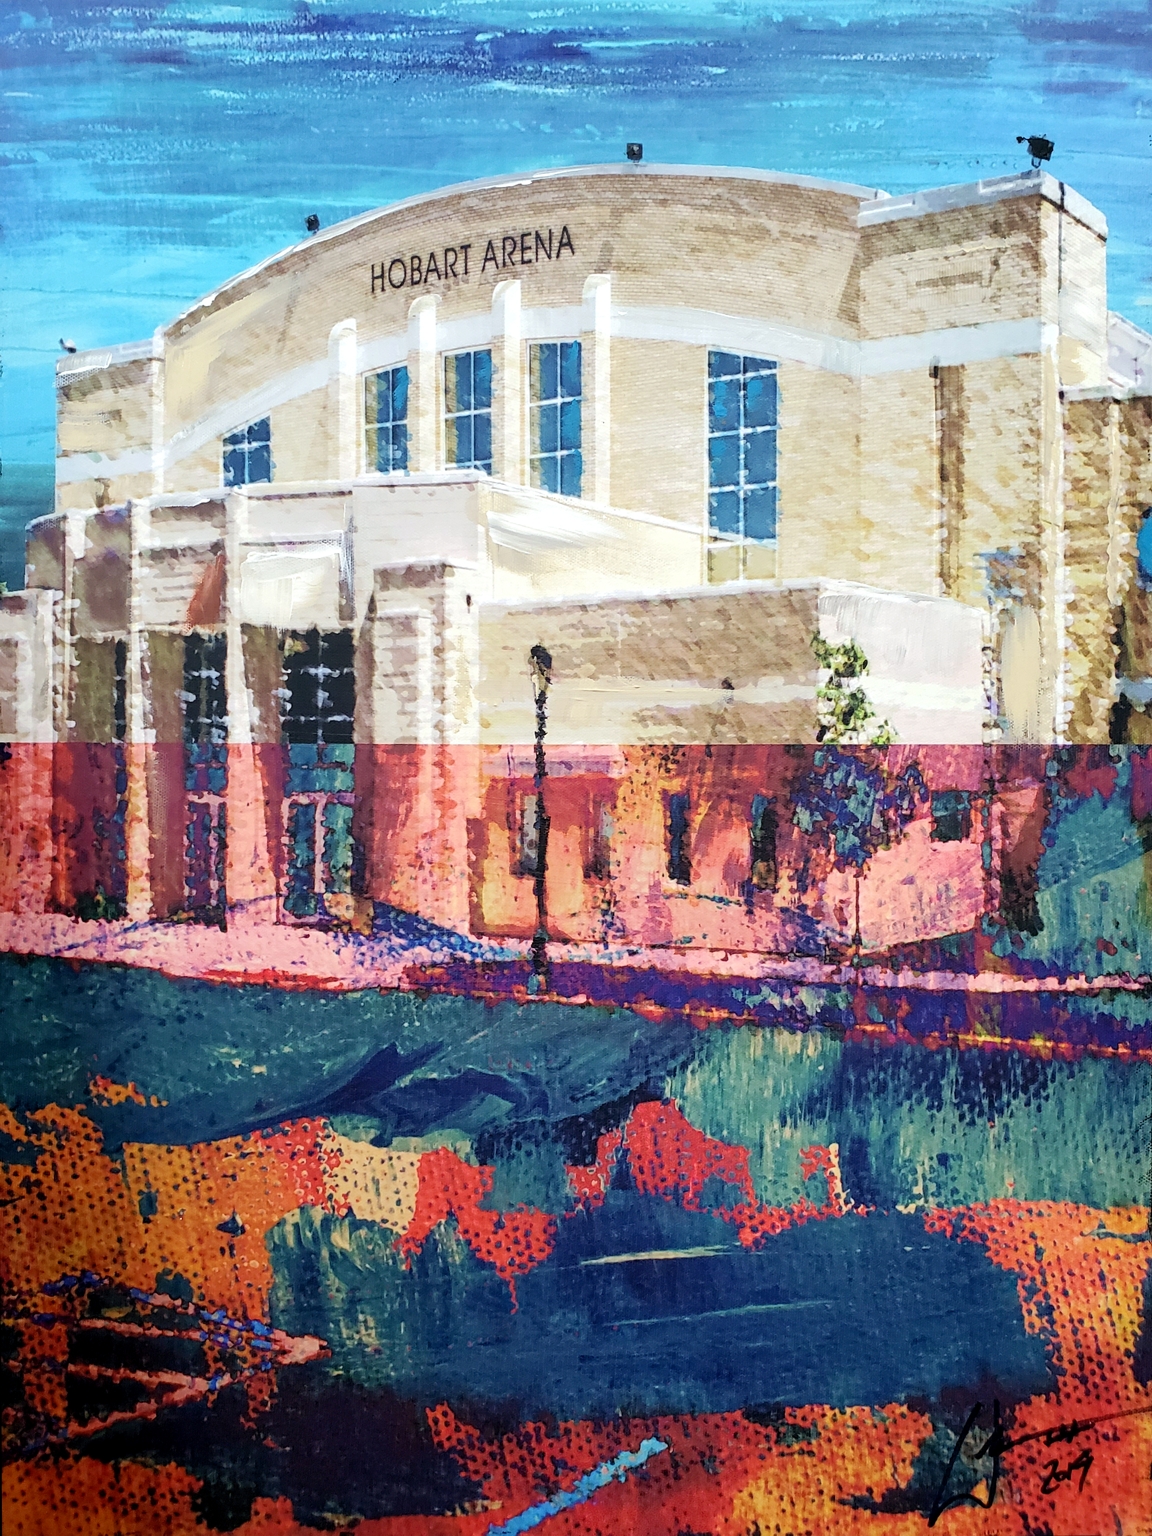 Hobart Arena of Troy, Ohio by artist, William III